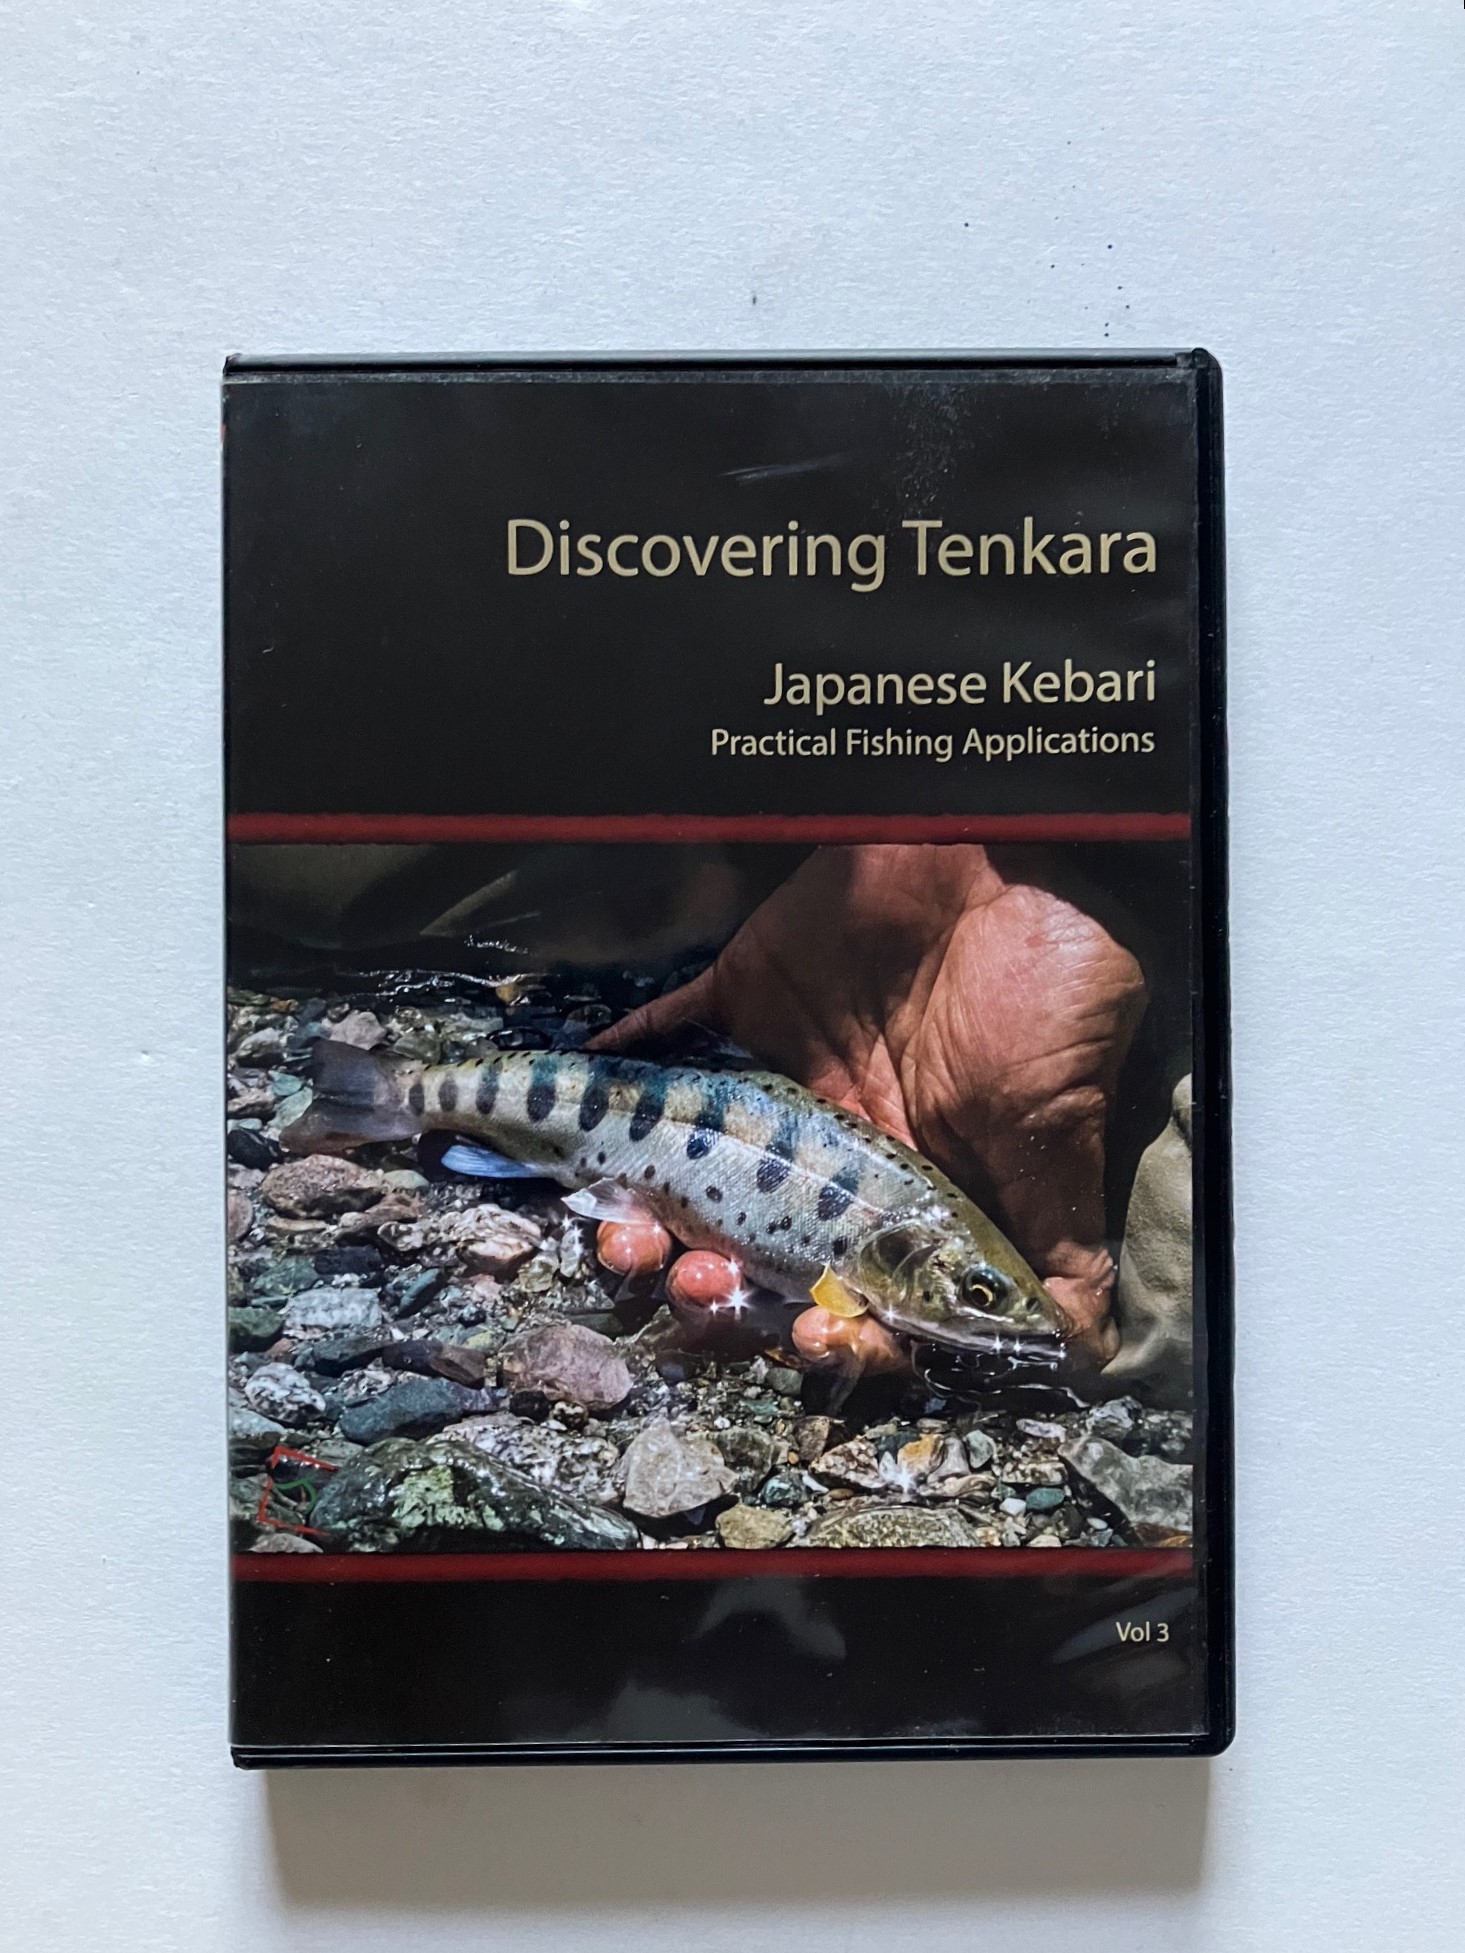 Tenkara: The Book